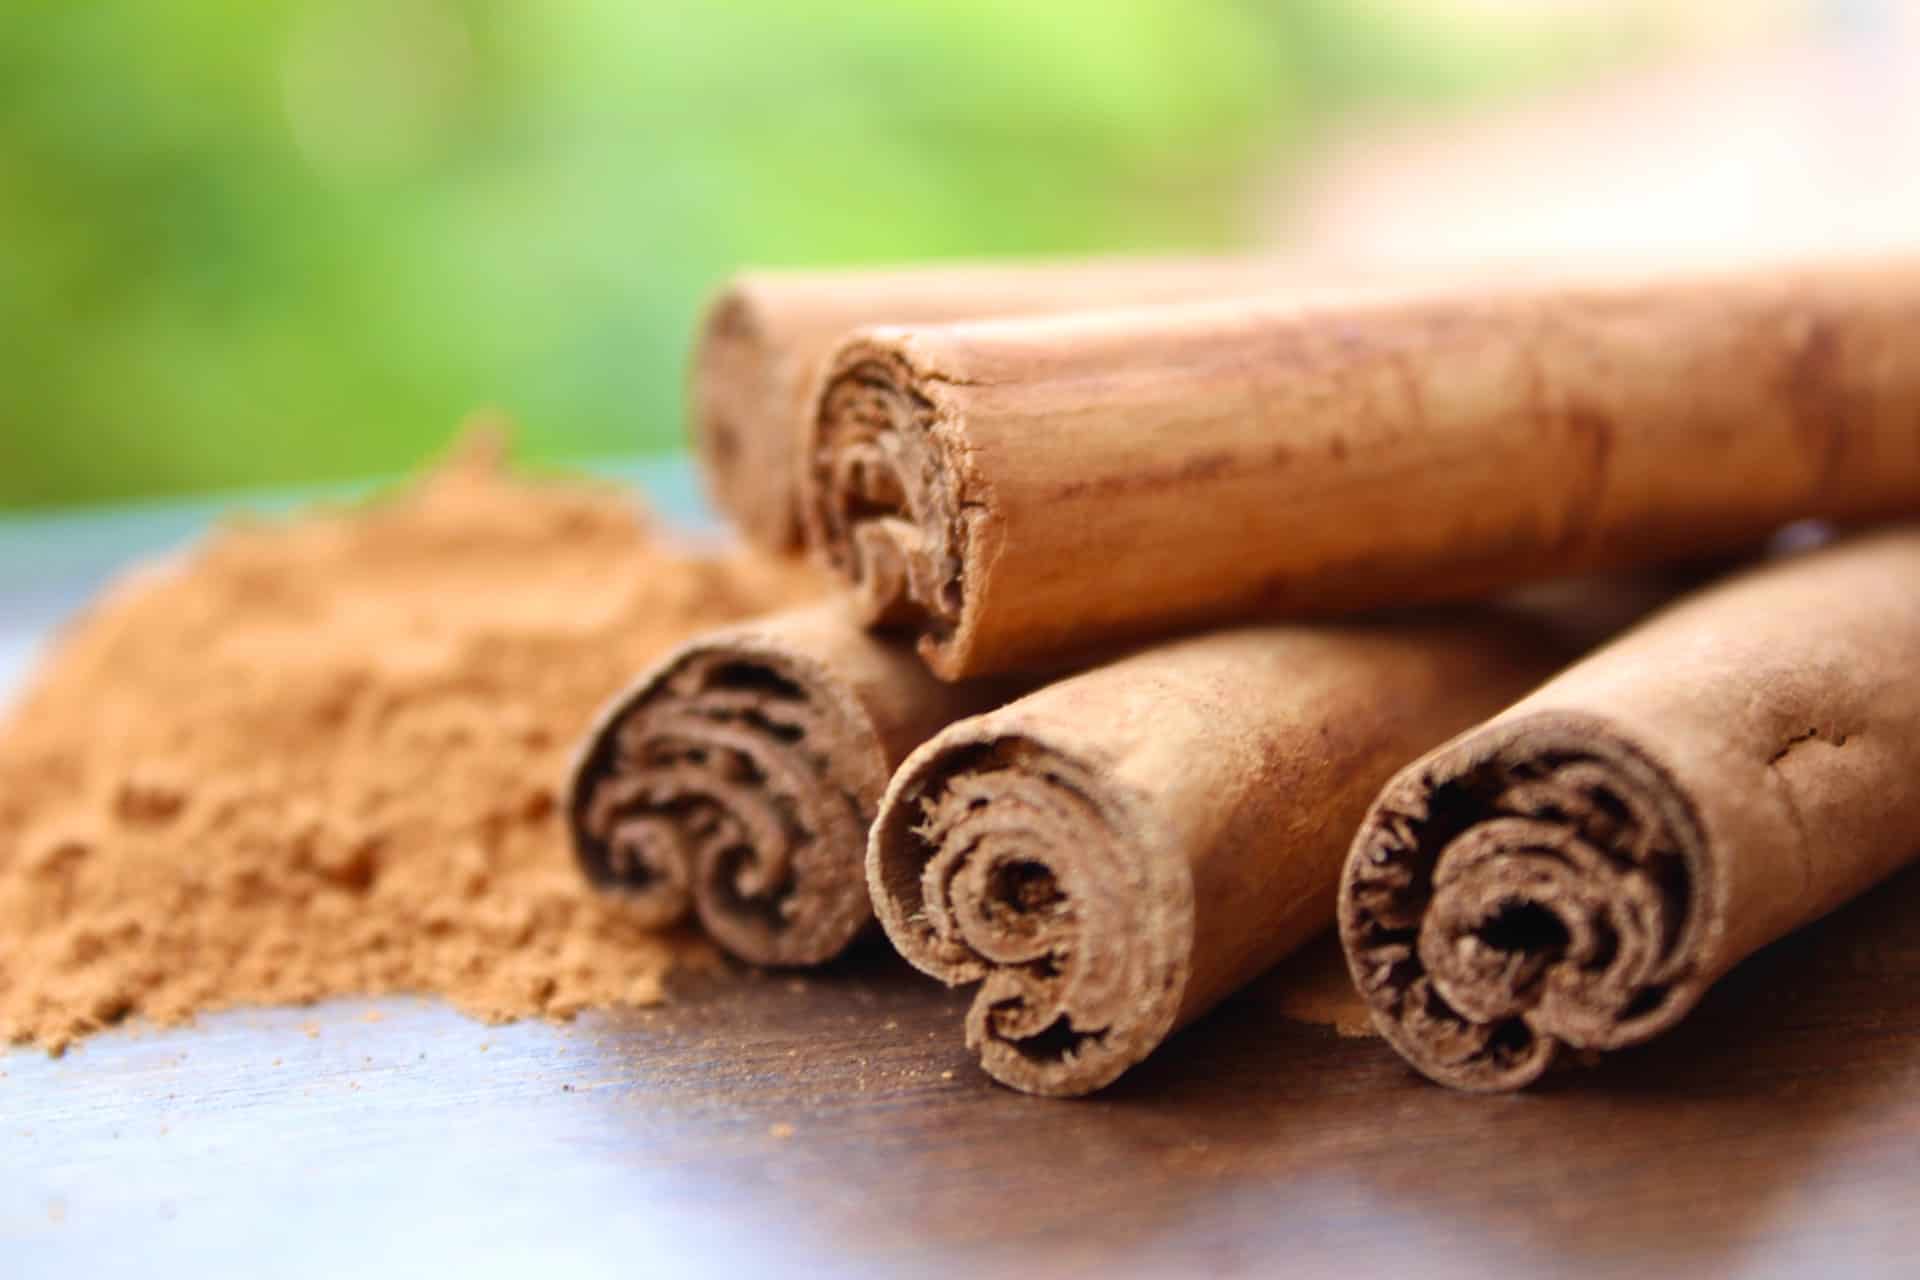 Ceylon Cinnamon – Benefits, Uses, and Where to Buy